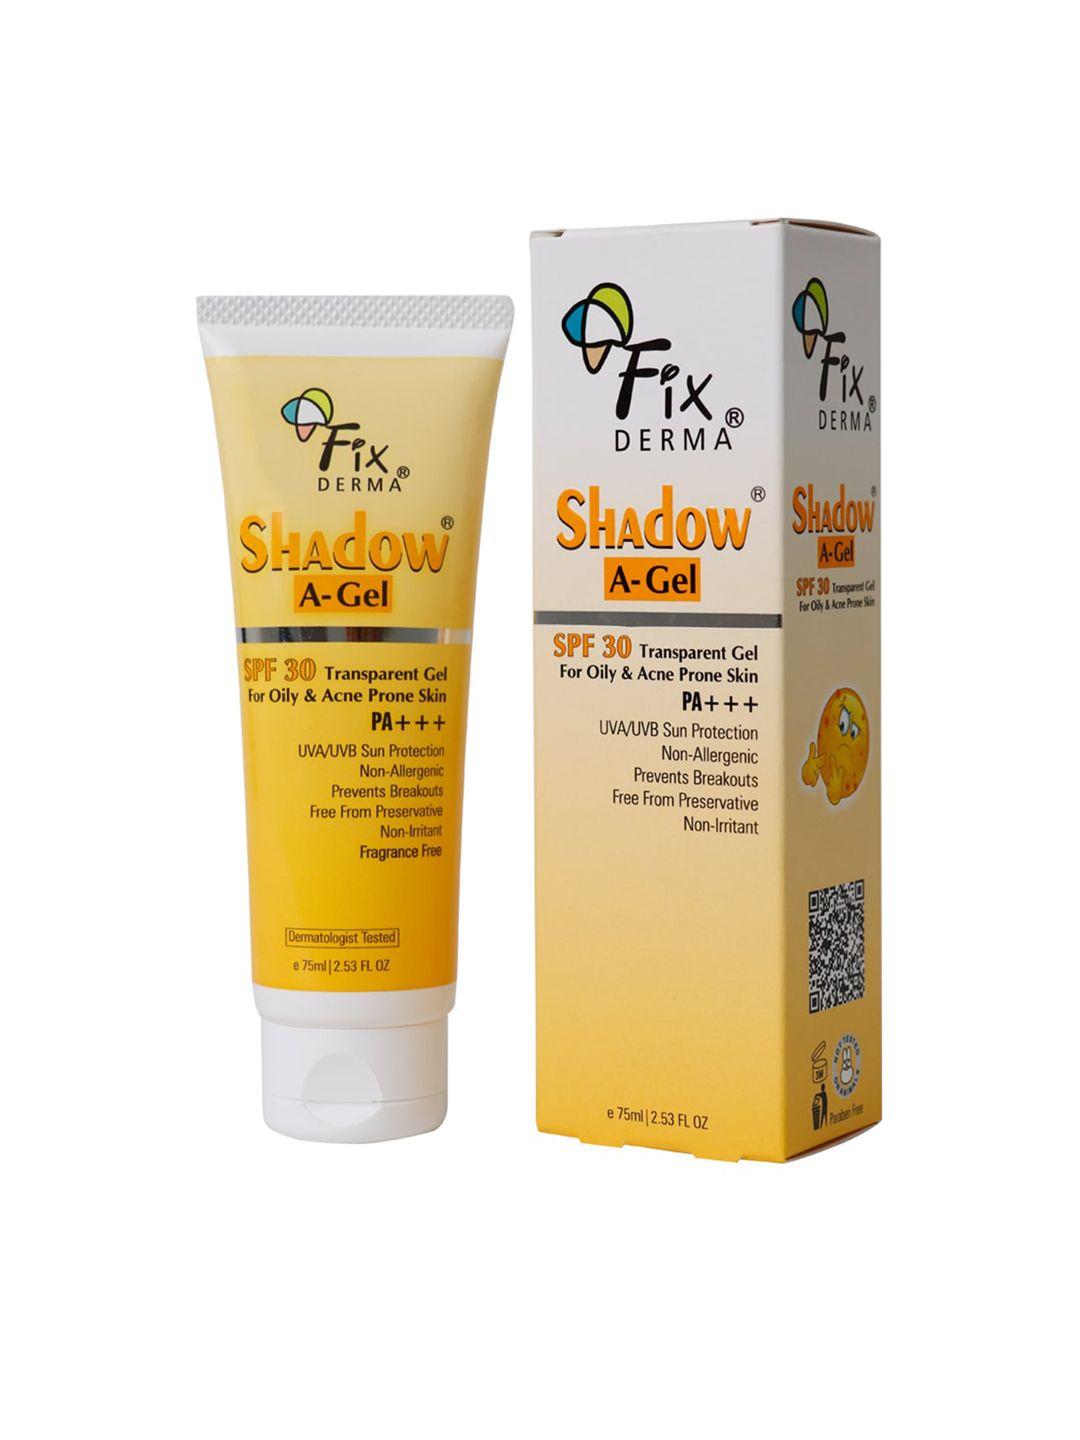 fixderma shadow a-gel spf 30 non-oily sunscreen for acne prone skin - 75ml